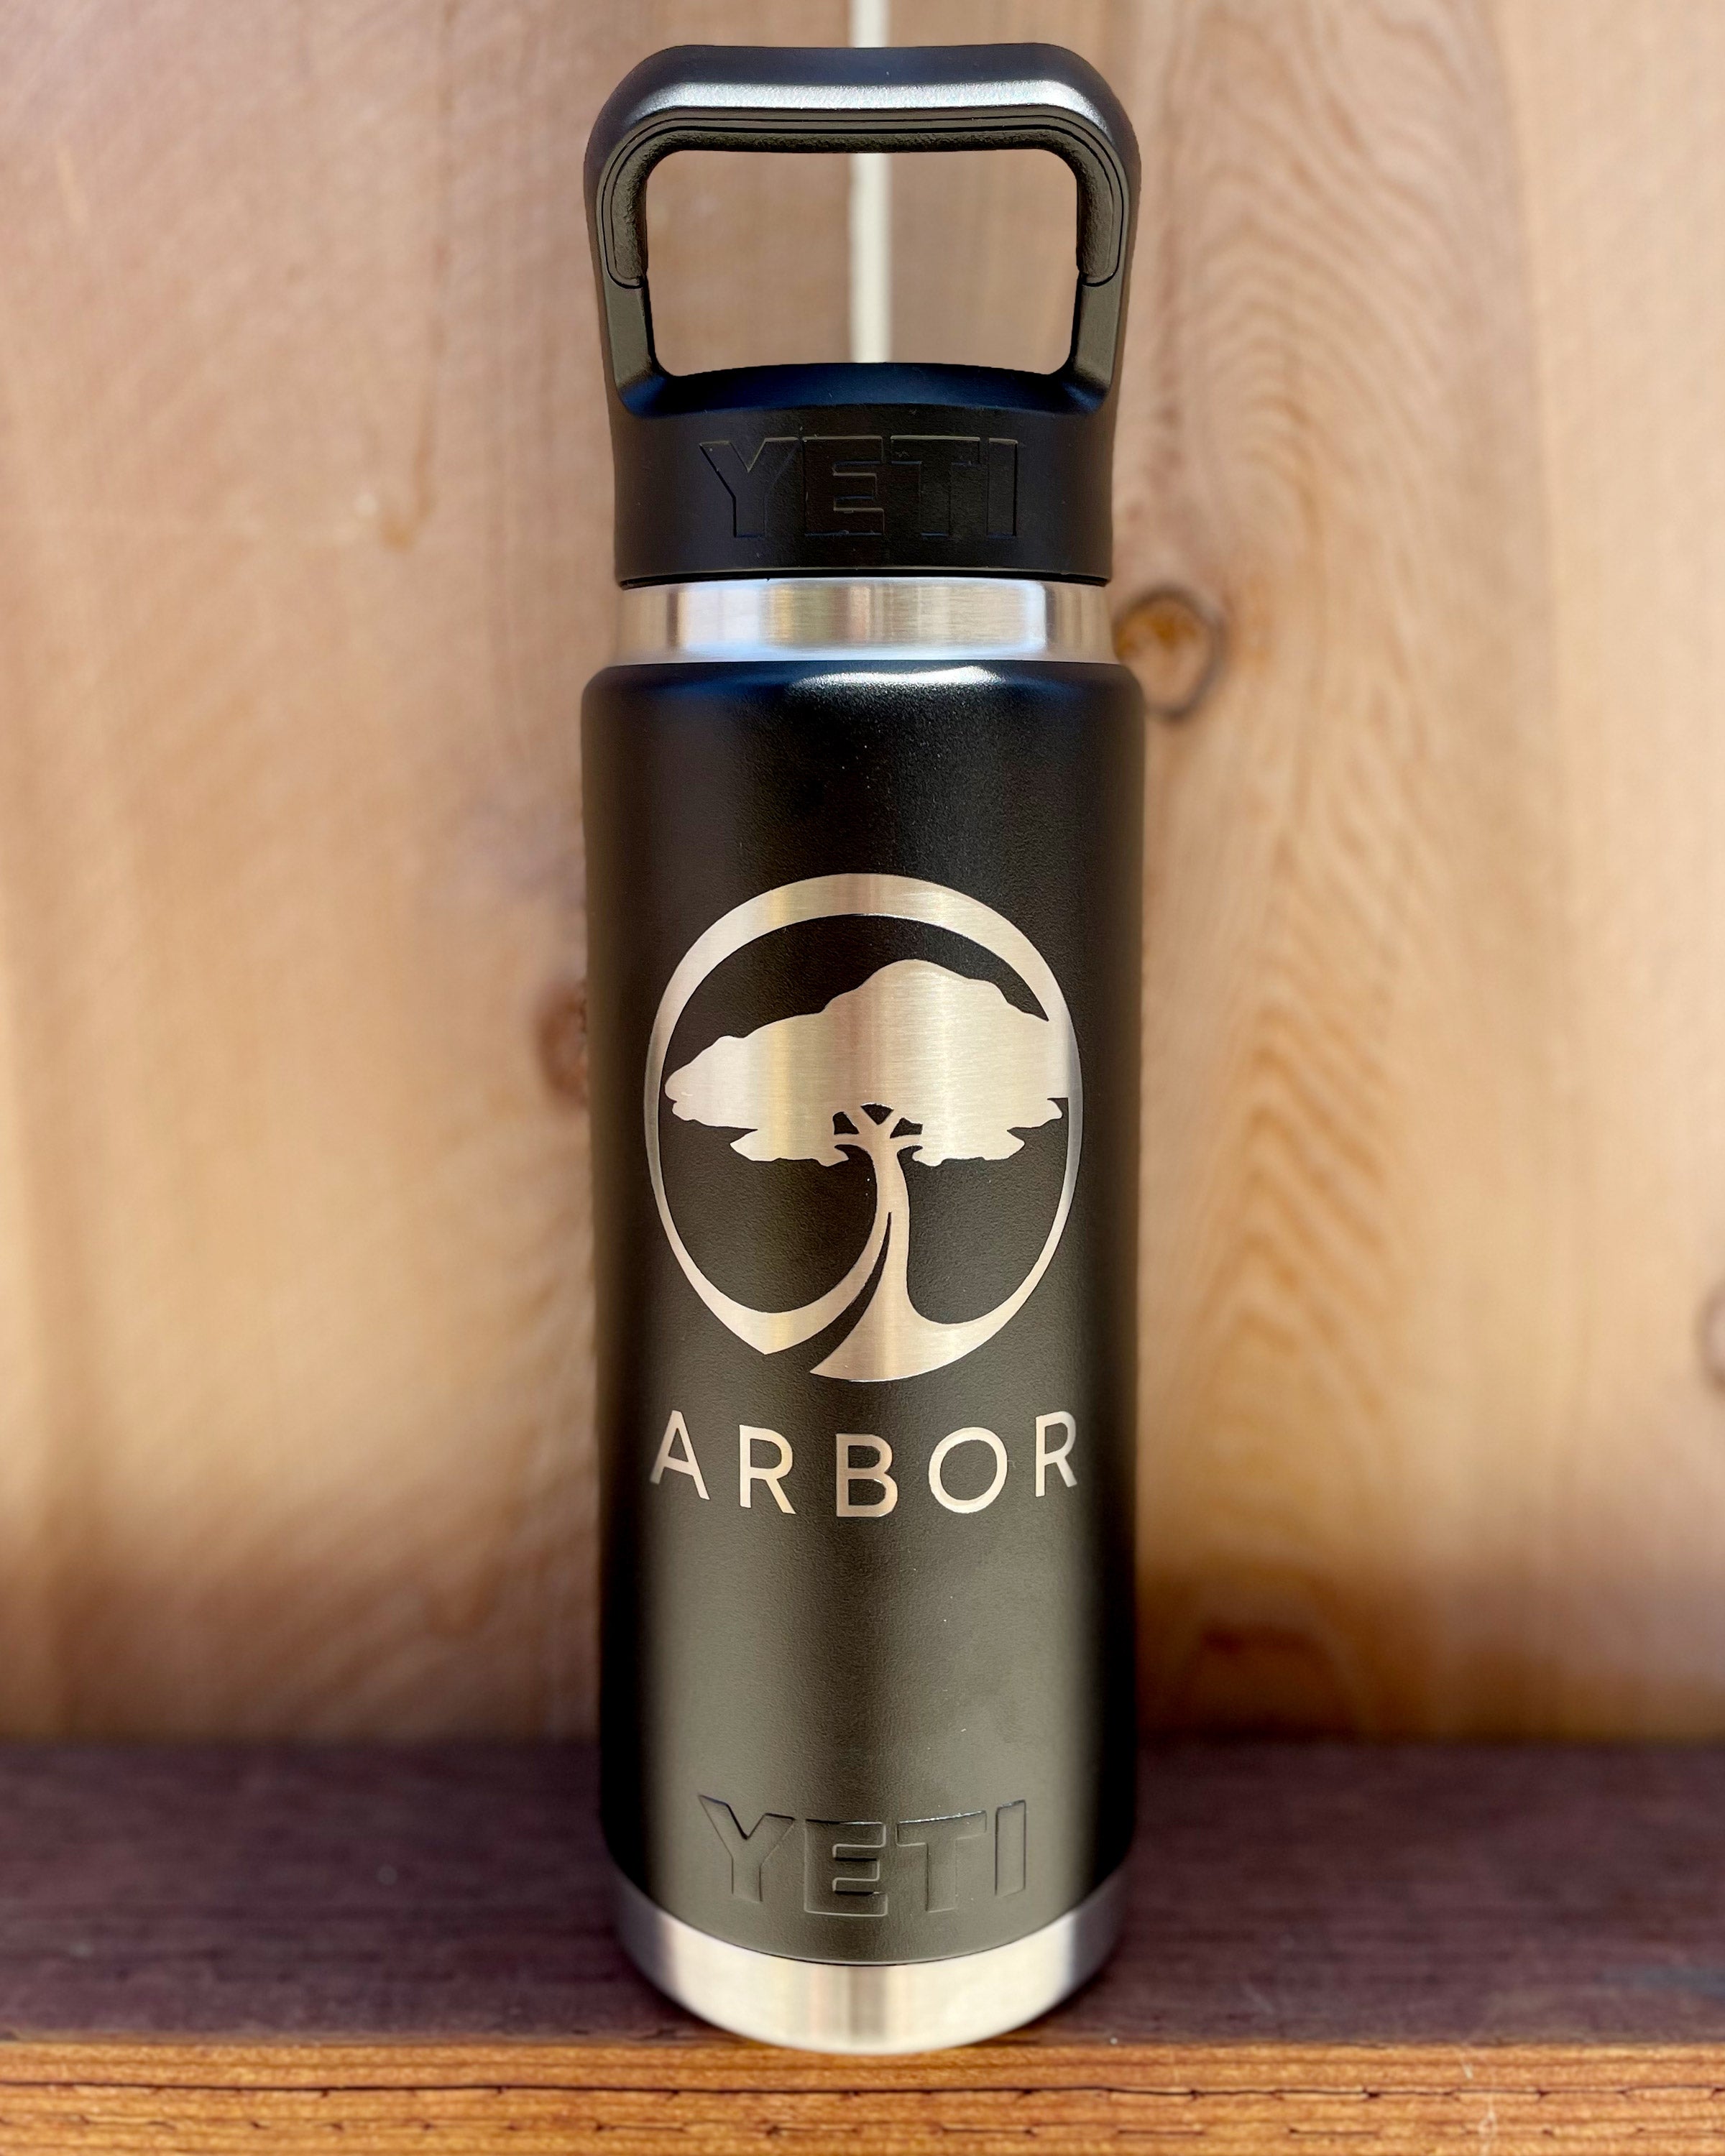 Arbor Collective Yeti Rambler 26 oz Water Bottle House of Hardwoods - Chug  Top